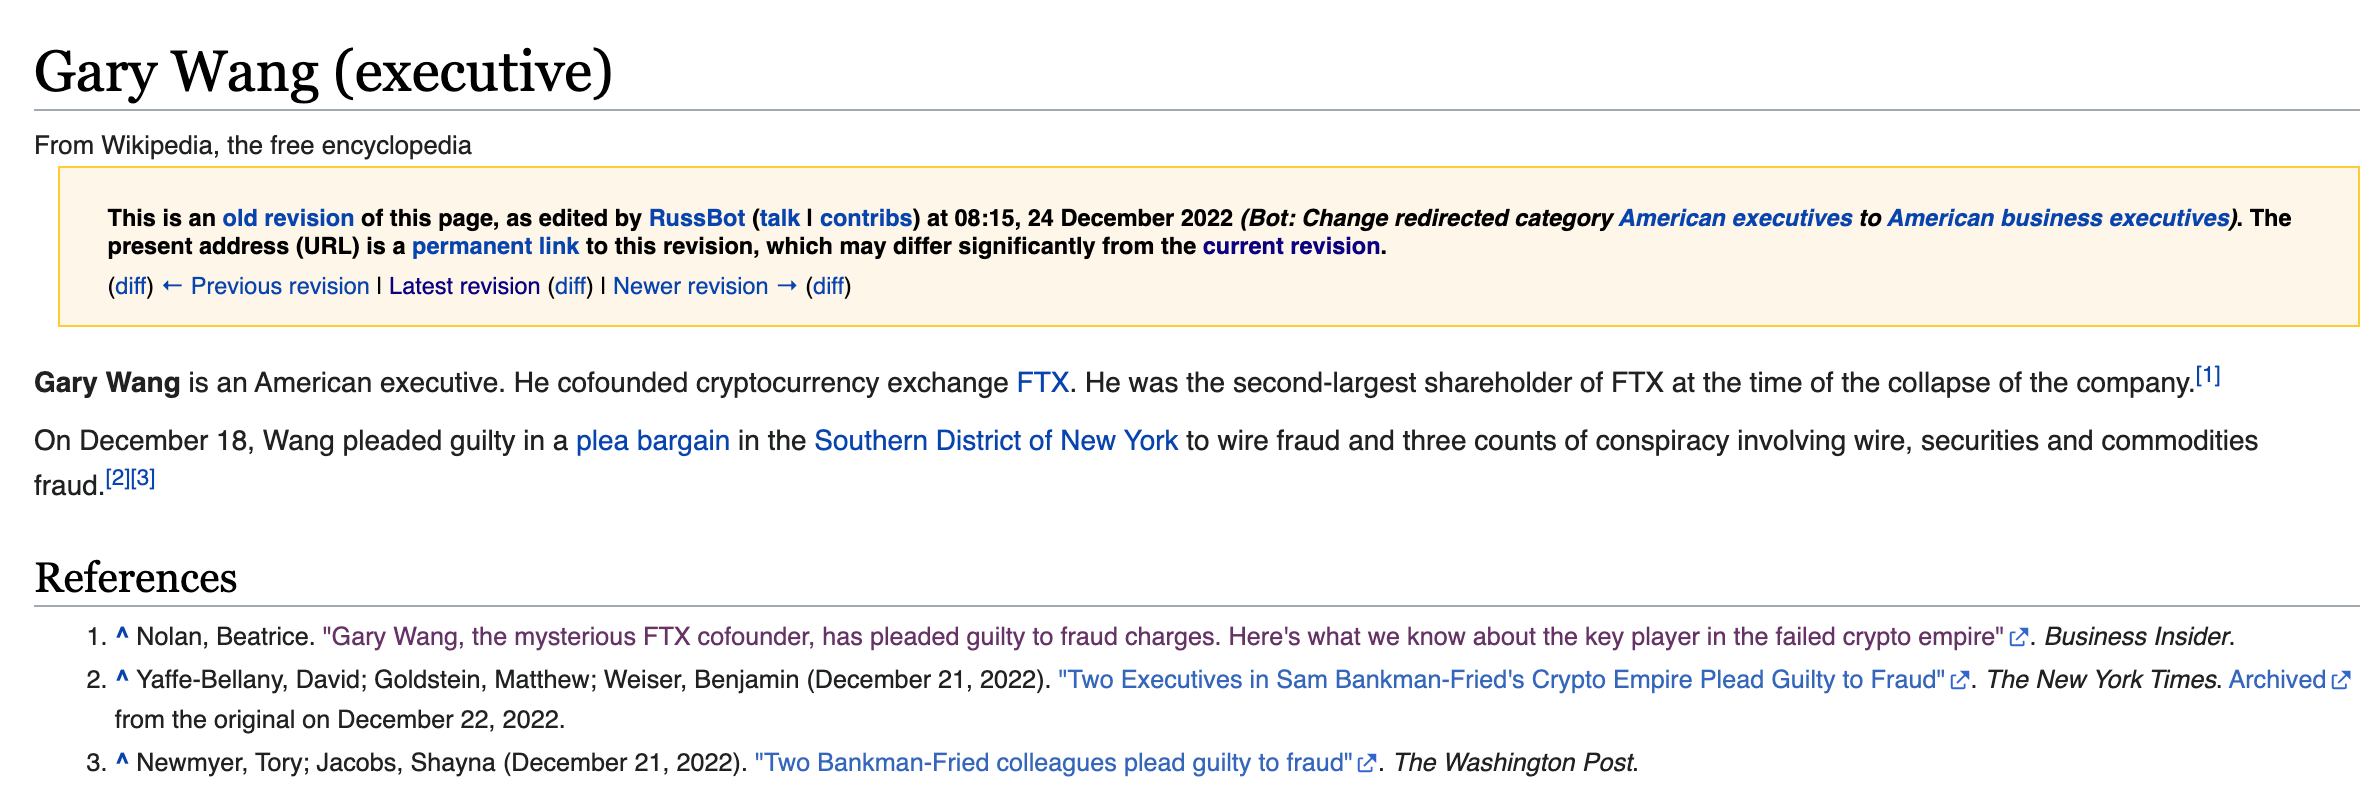 a screenshot of gary wang's wikipedia page when i first saw it